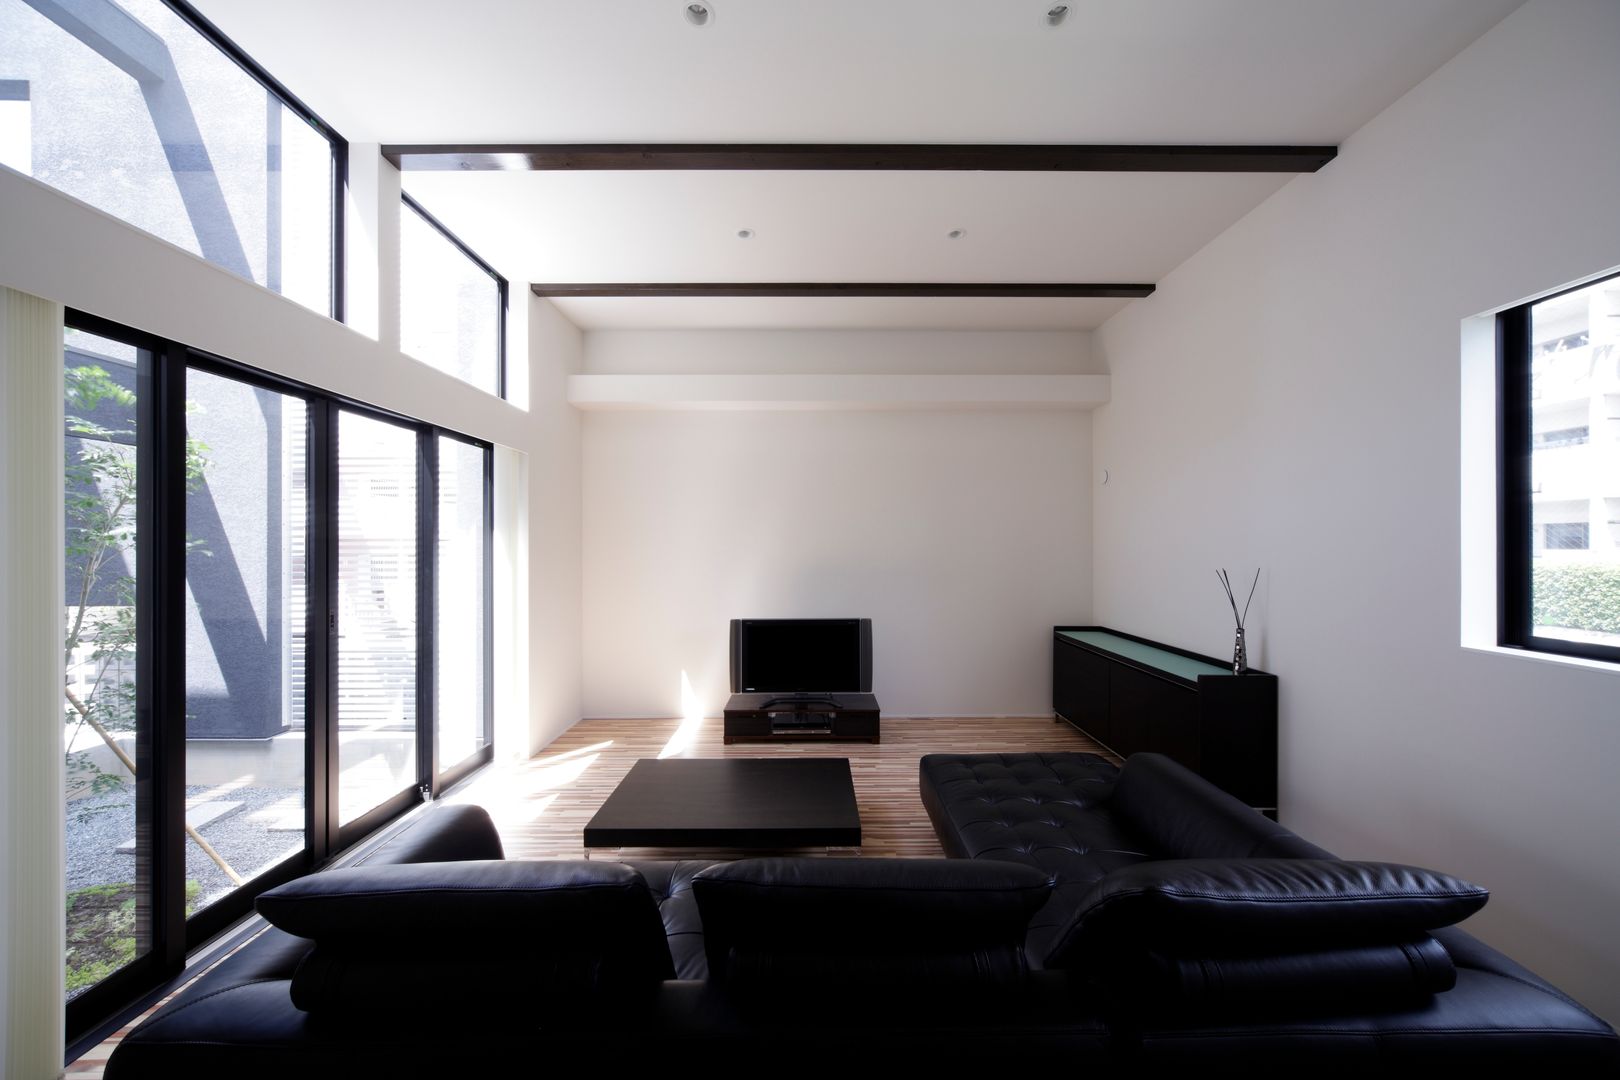 S House , artect design - アルテクト デザイン artect design - アルテクト デザイン Living room